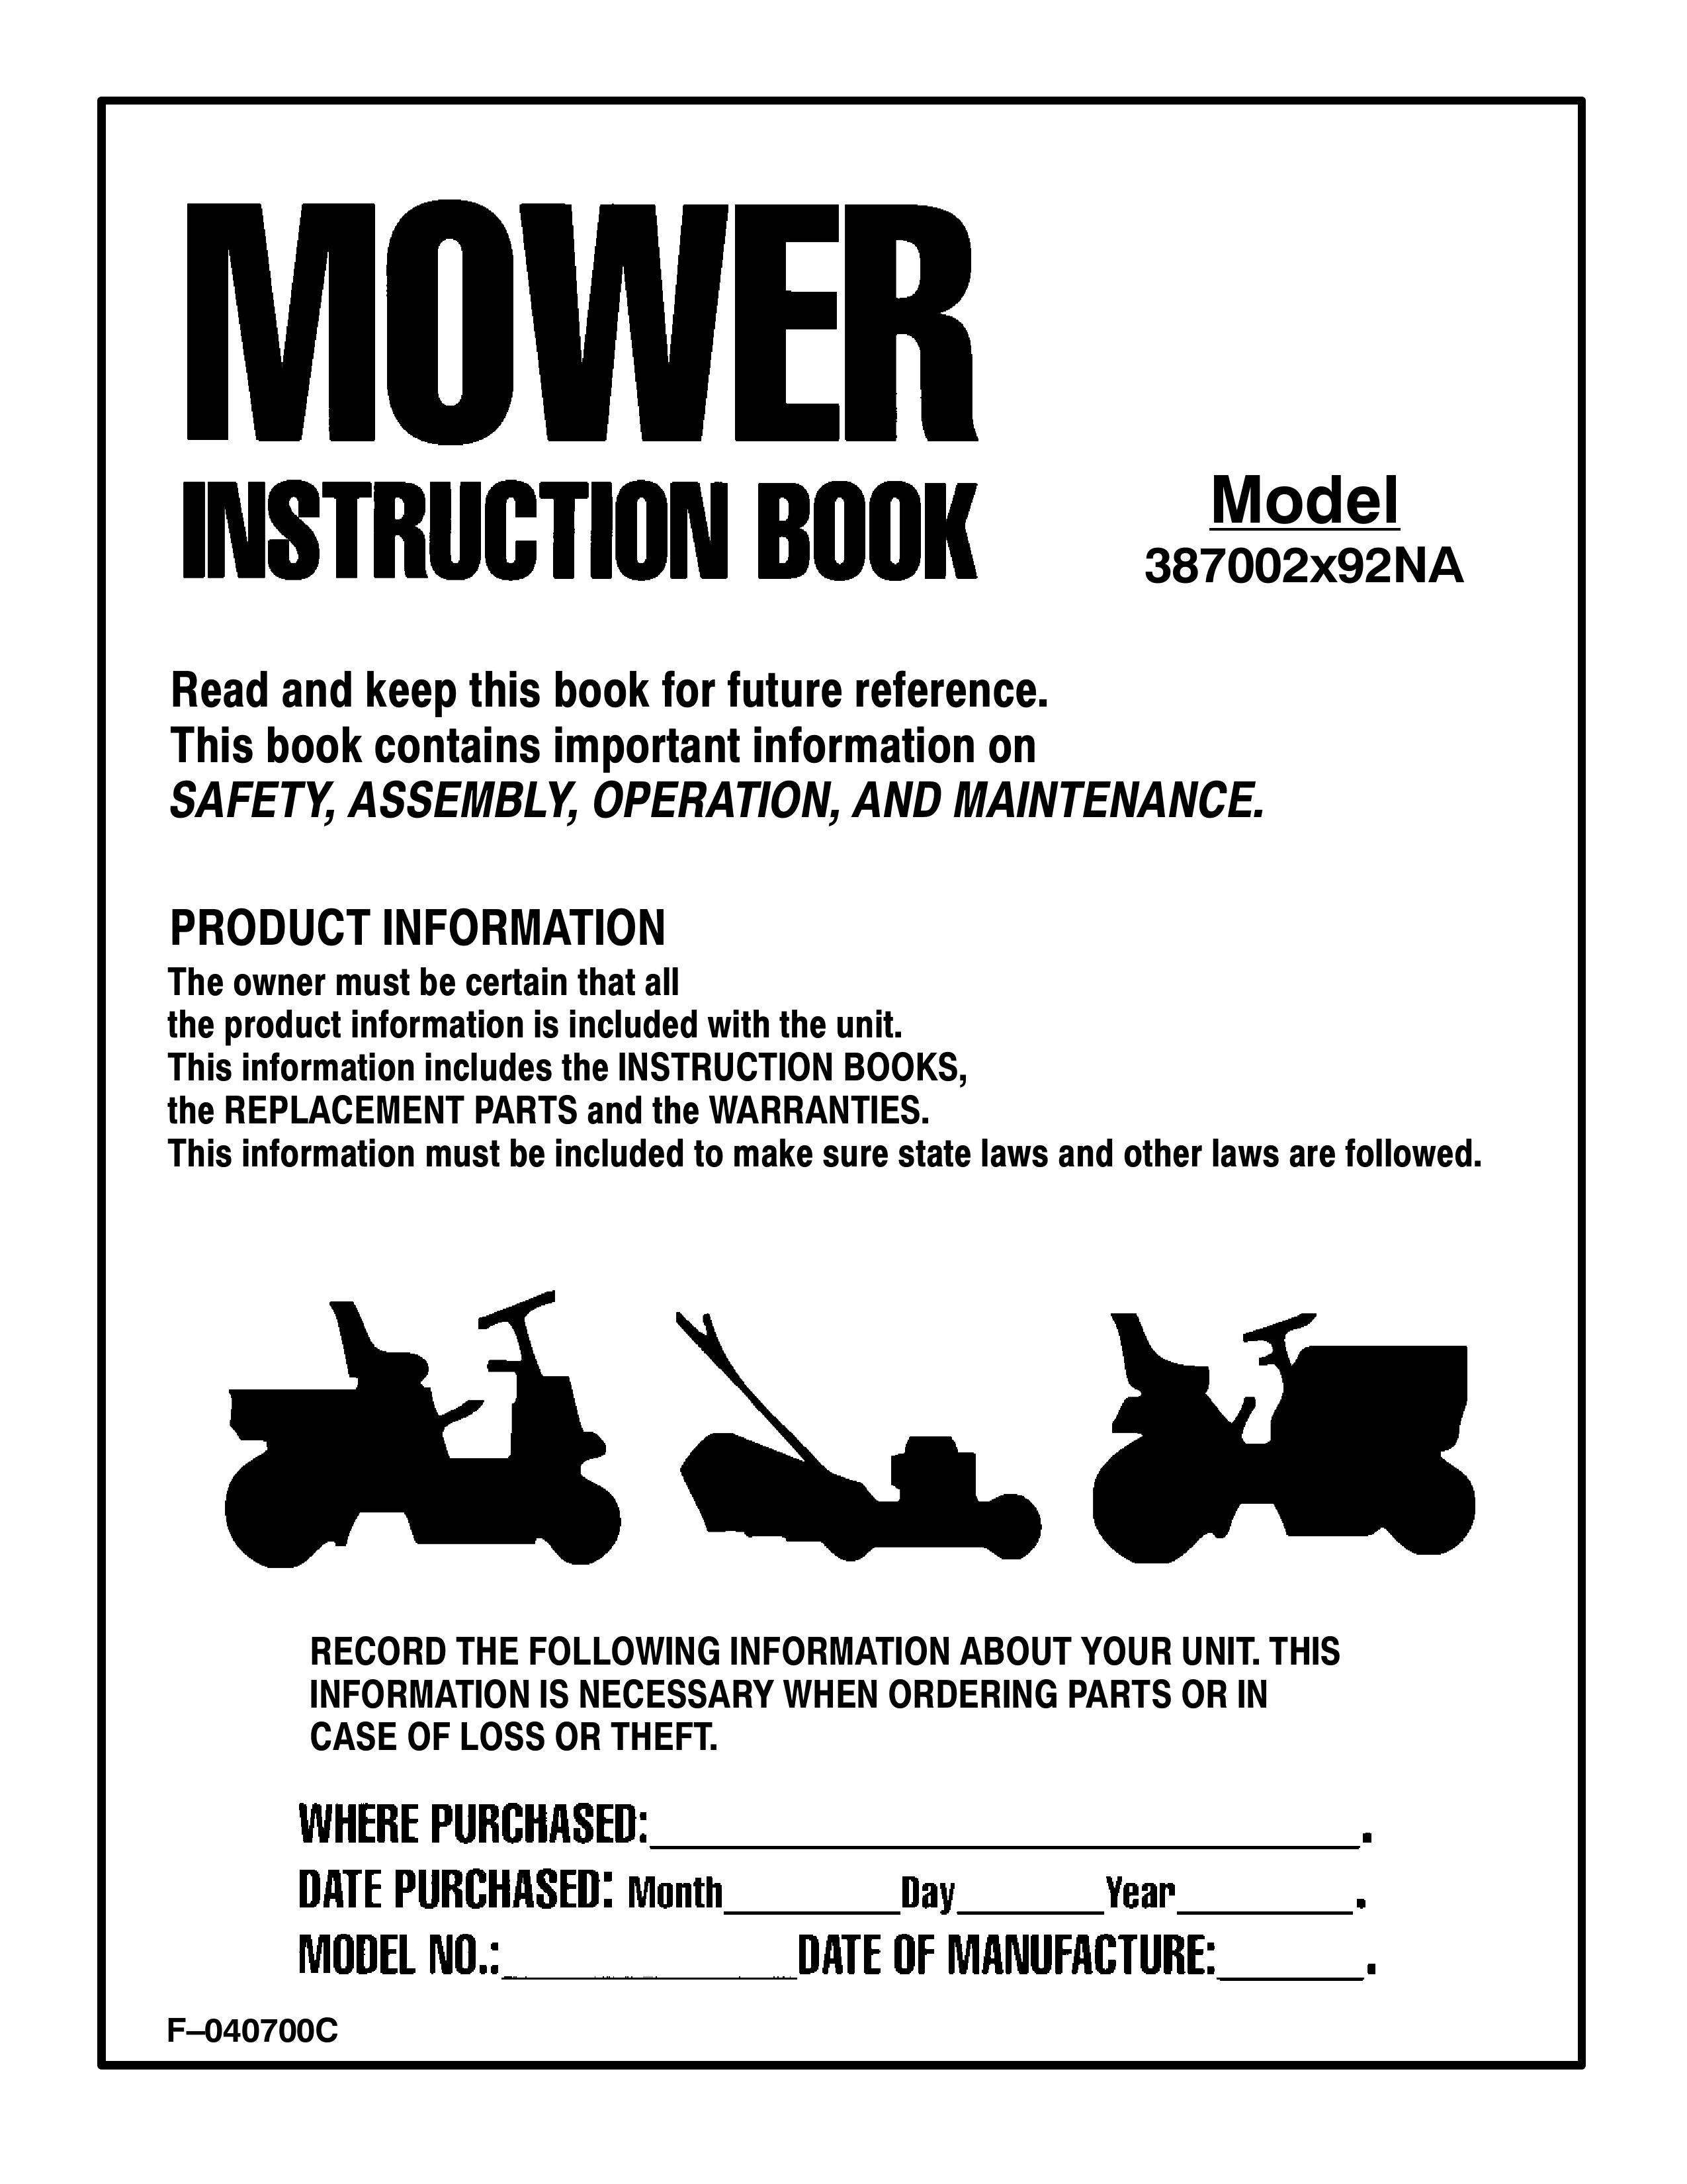 Stanley Black & Decker 387002x92NA Lawn Mower User Manual